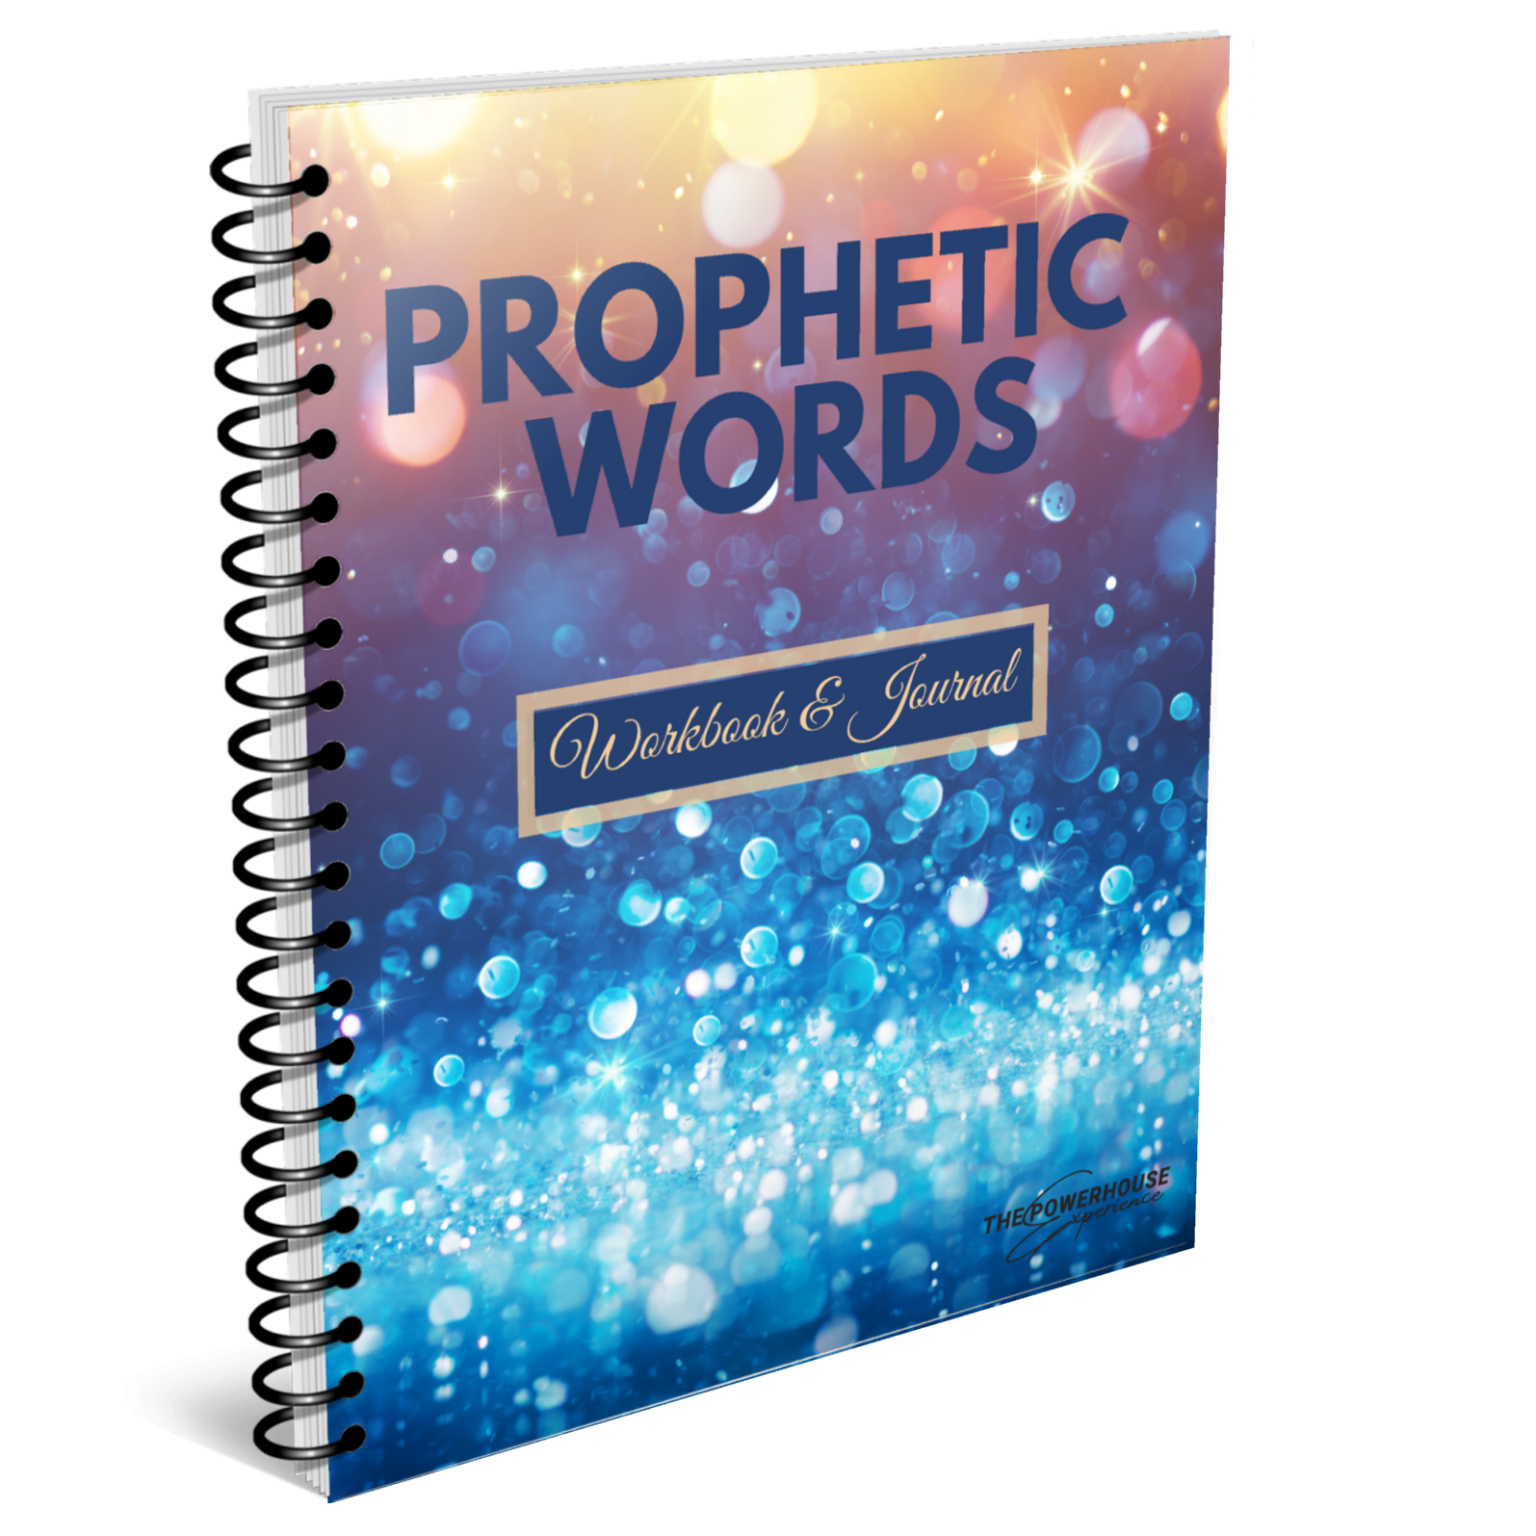 Prophetic Words Workbook/Journal The Powerhouse Experience